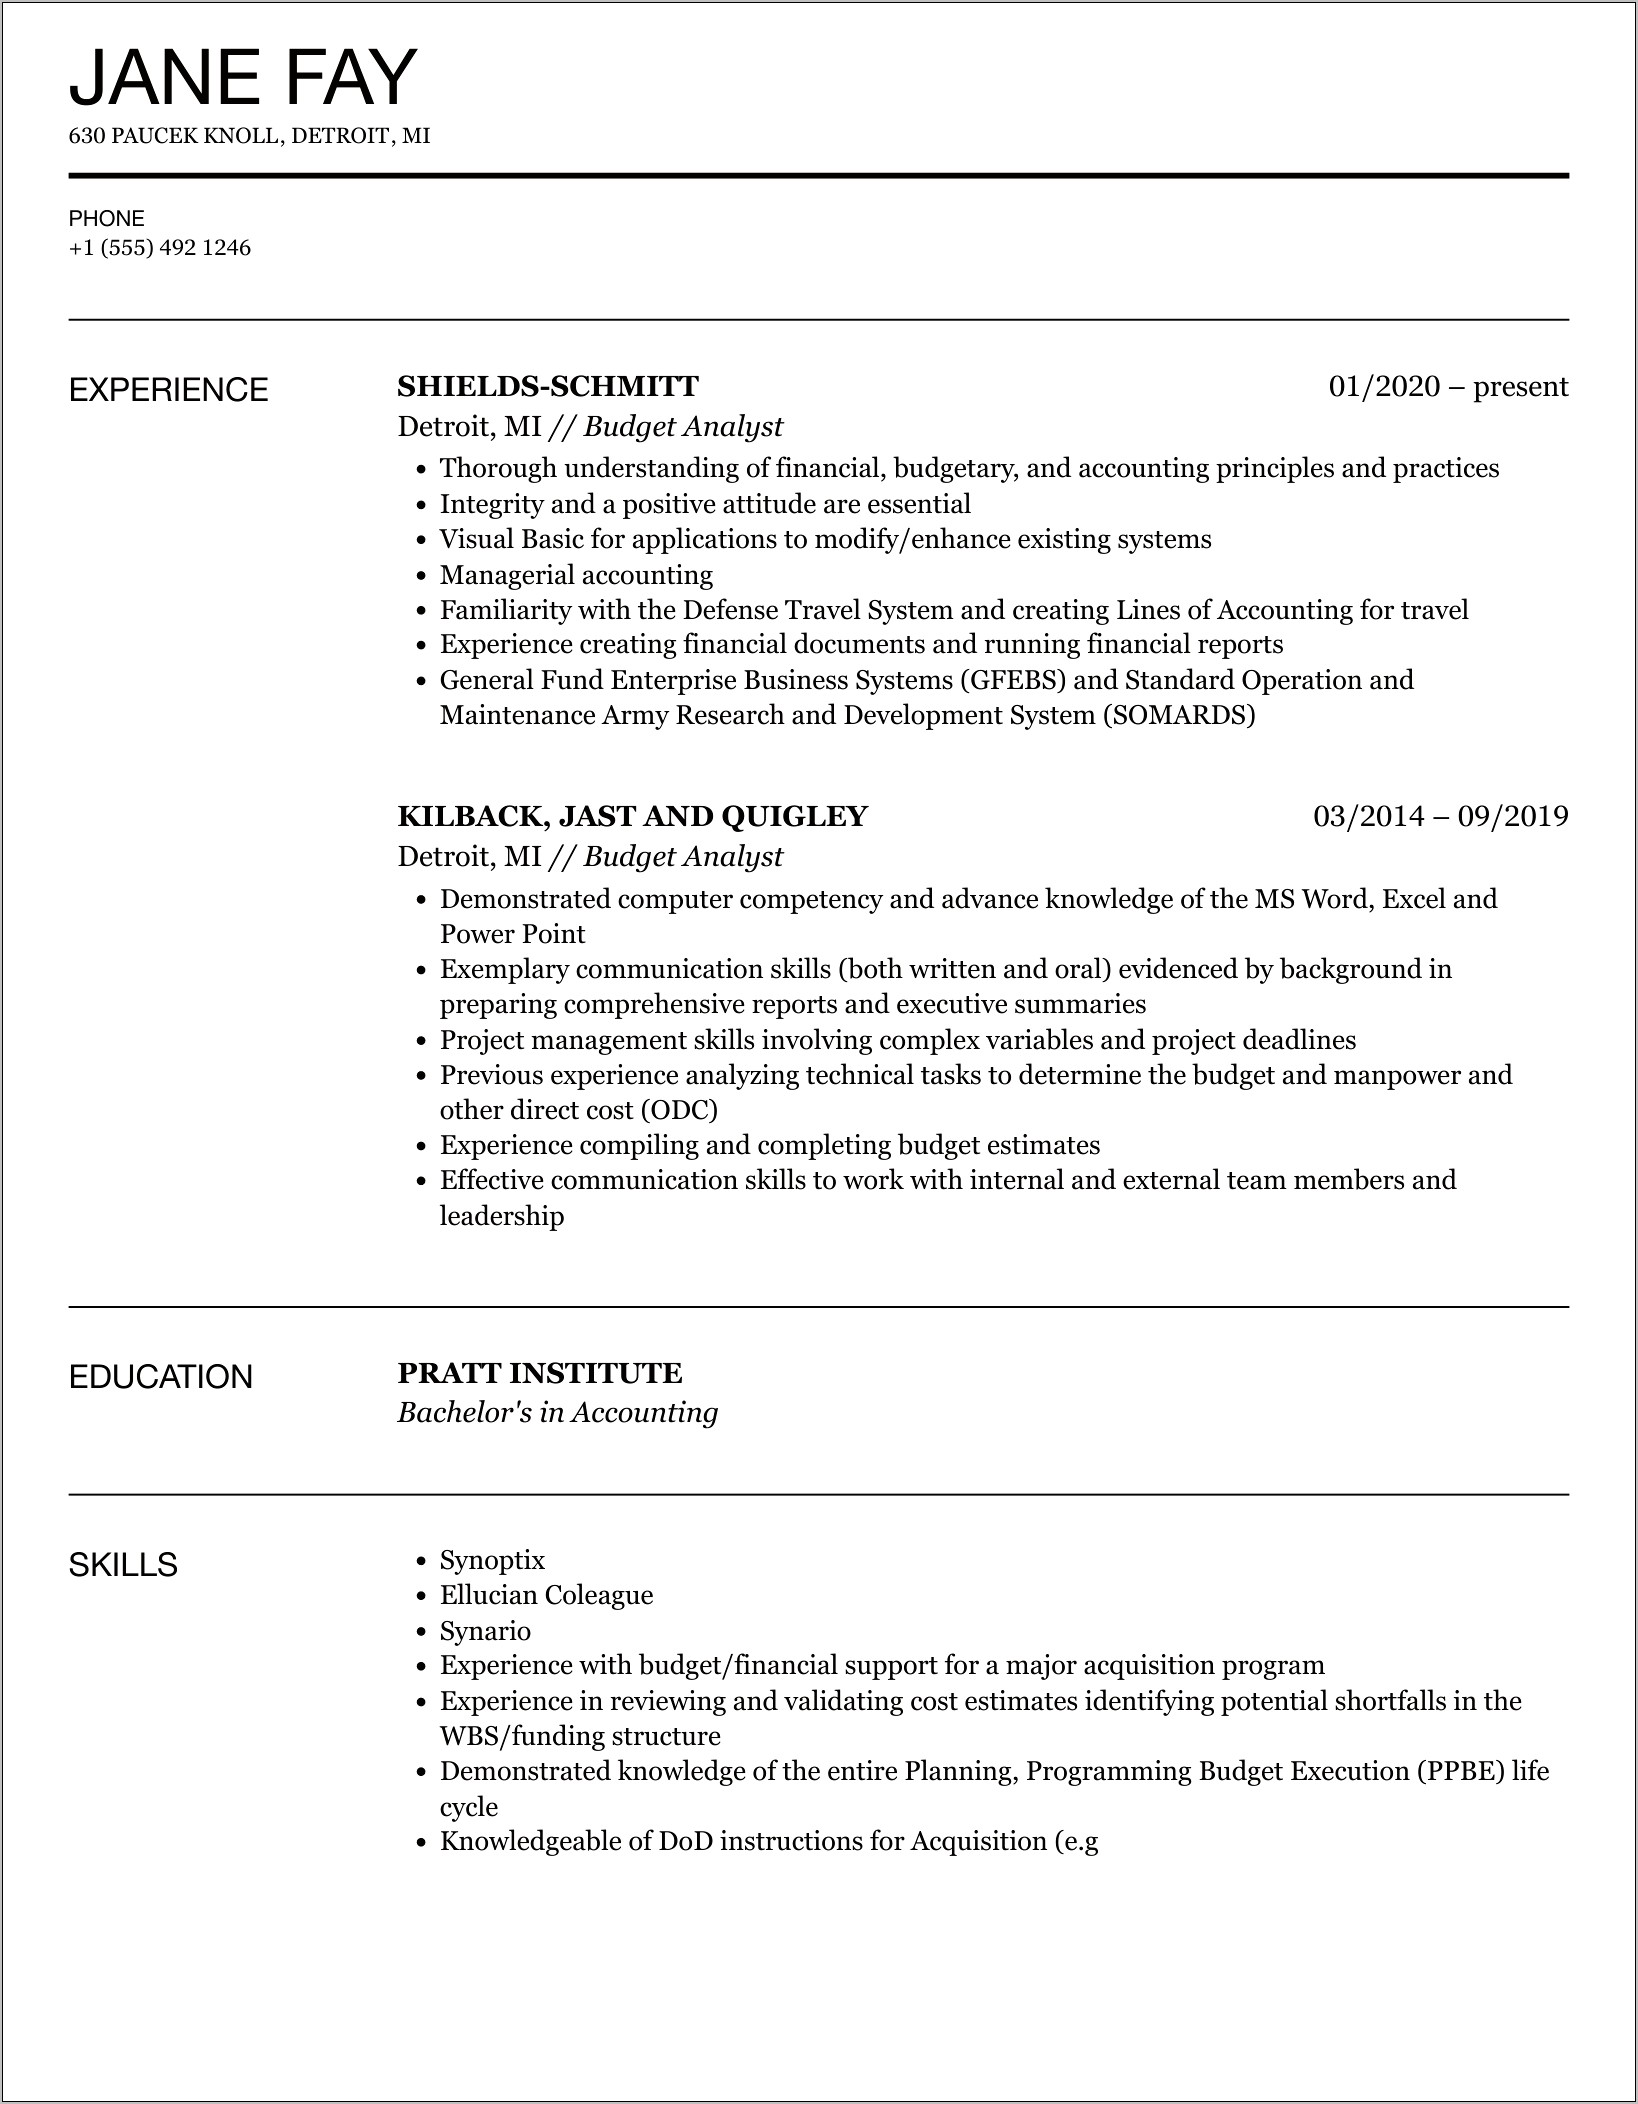 Narrative Resume For Federal Job